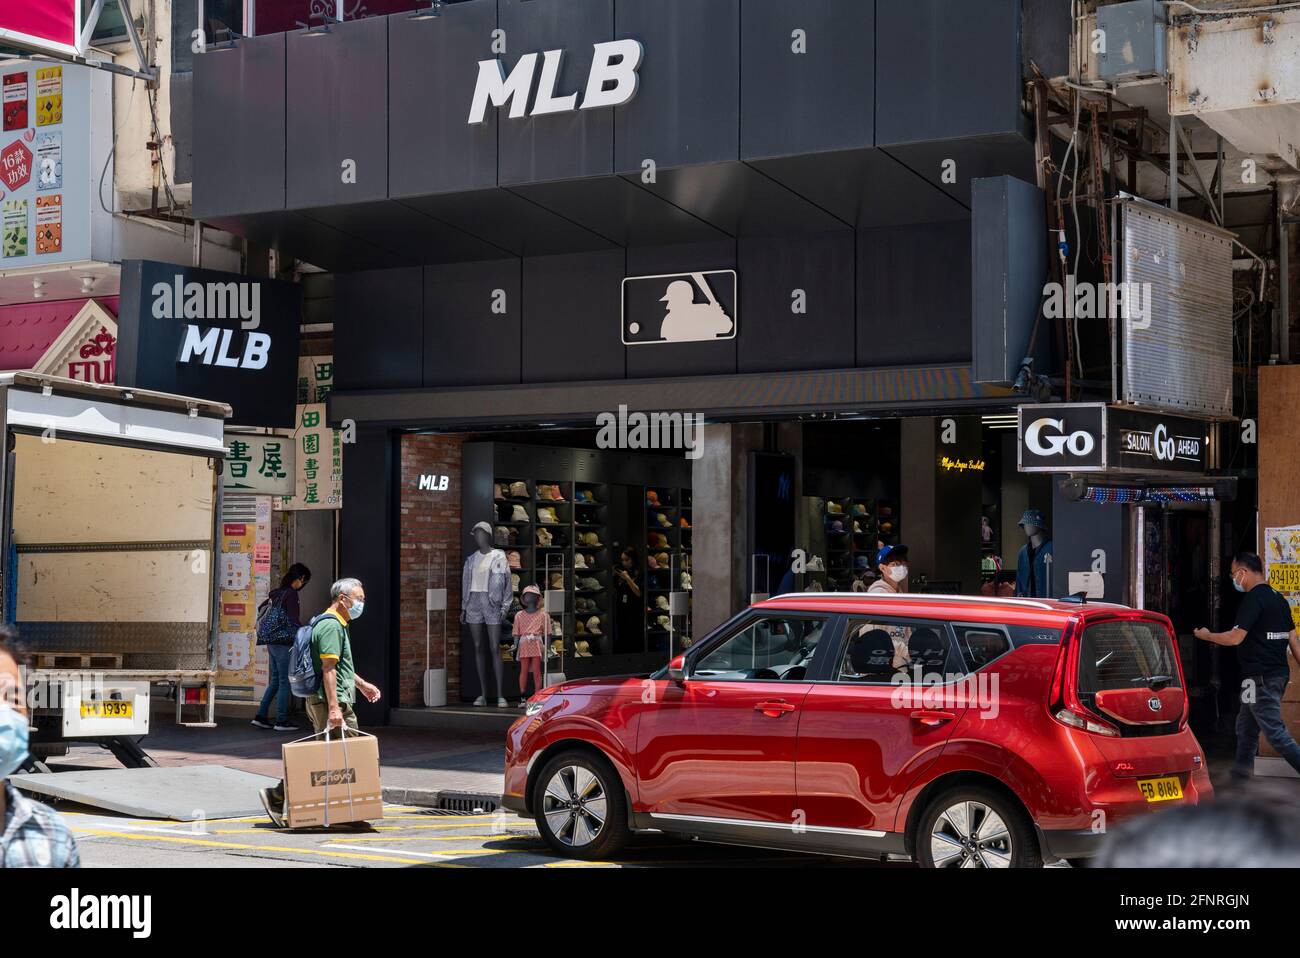 The American professional baseball organization, Major League Baseball (MLB),official  merchandise store in Hong Kong Stock Photo - Alamy